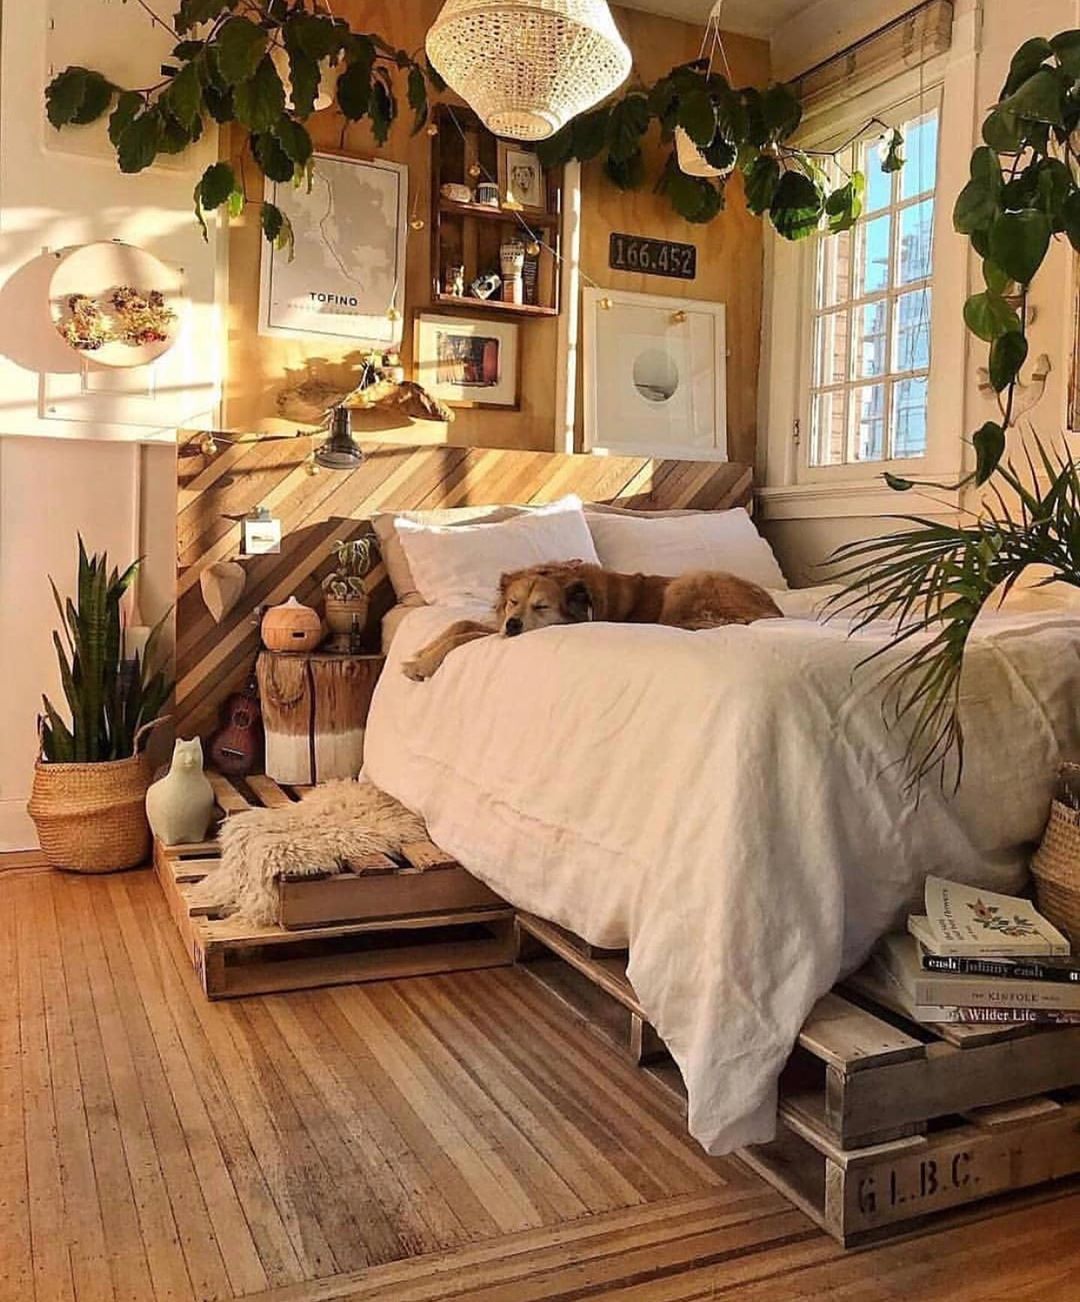 Architecture & Design - Cozy boho bedroom by @marzena.marideko [IG